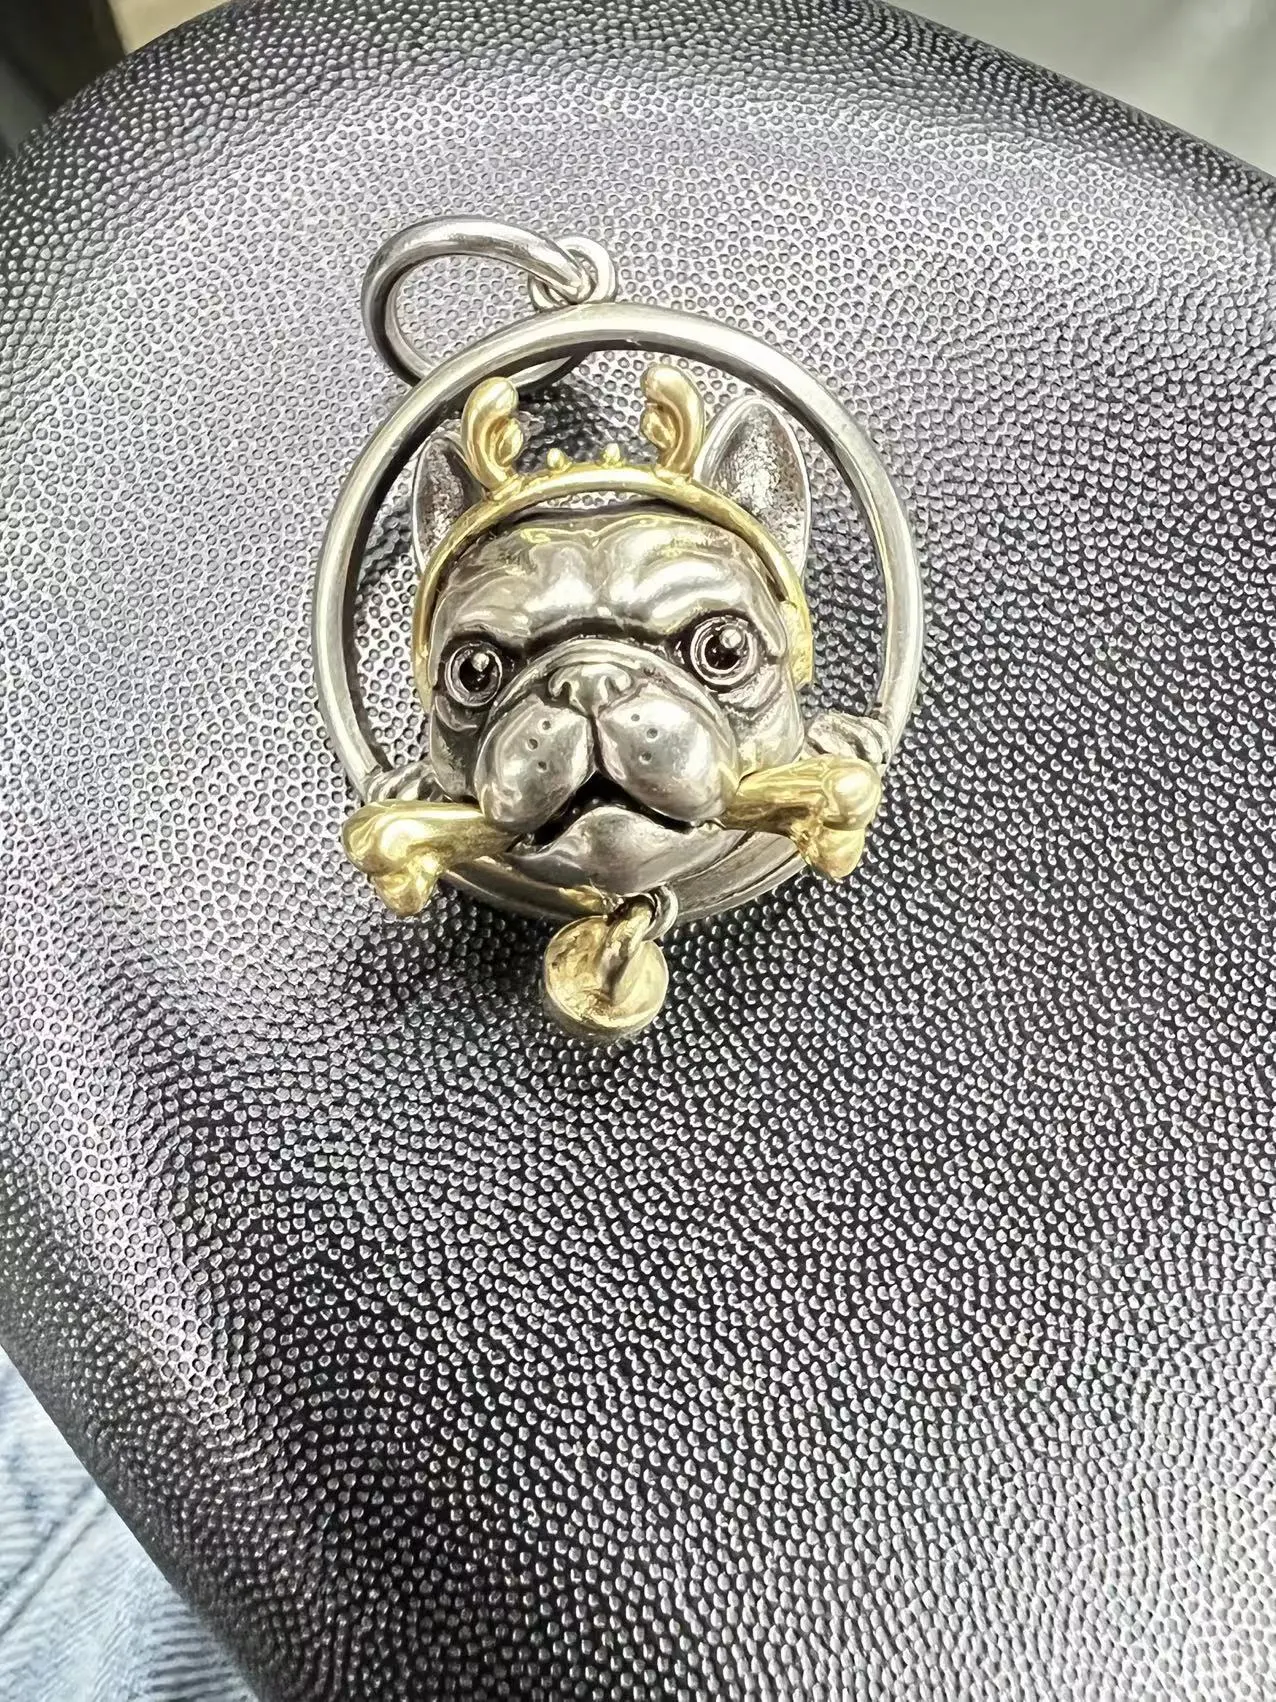 Bulldog Necklace Pendant, Send Family, Friends Gifts, Creative Pendants